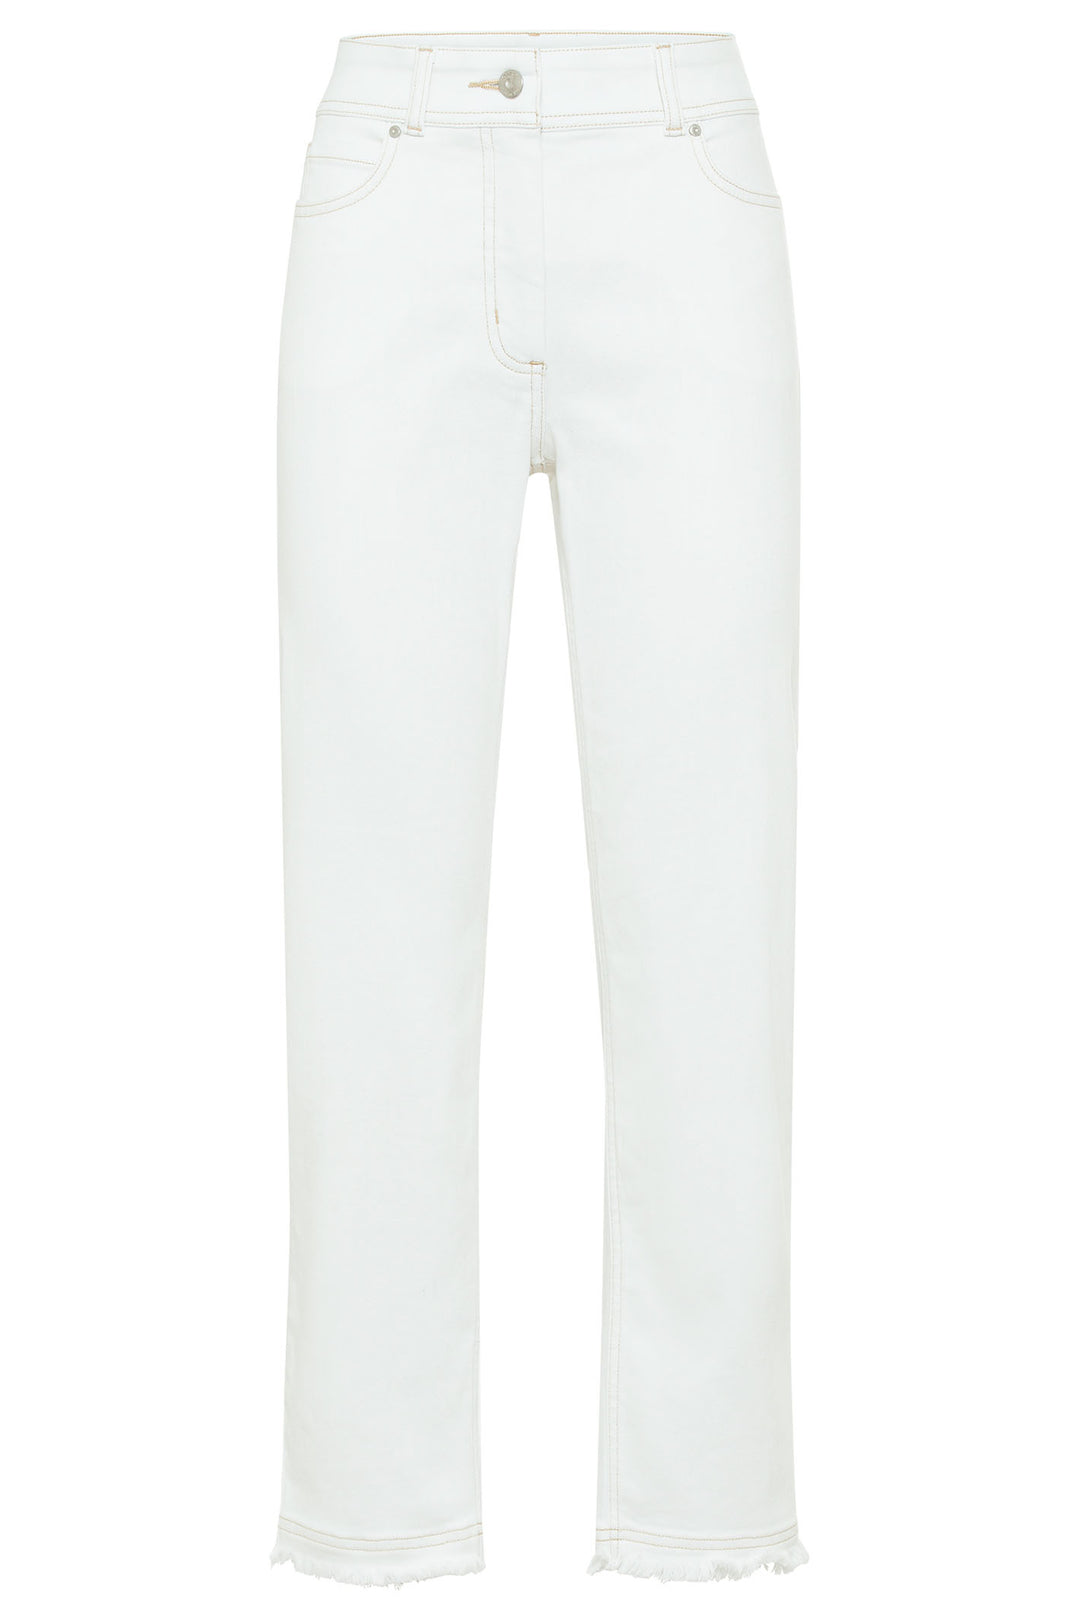 Olsen 14002164 White Frayed Hem Cropped Denim Jeans - Experience Boutique